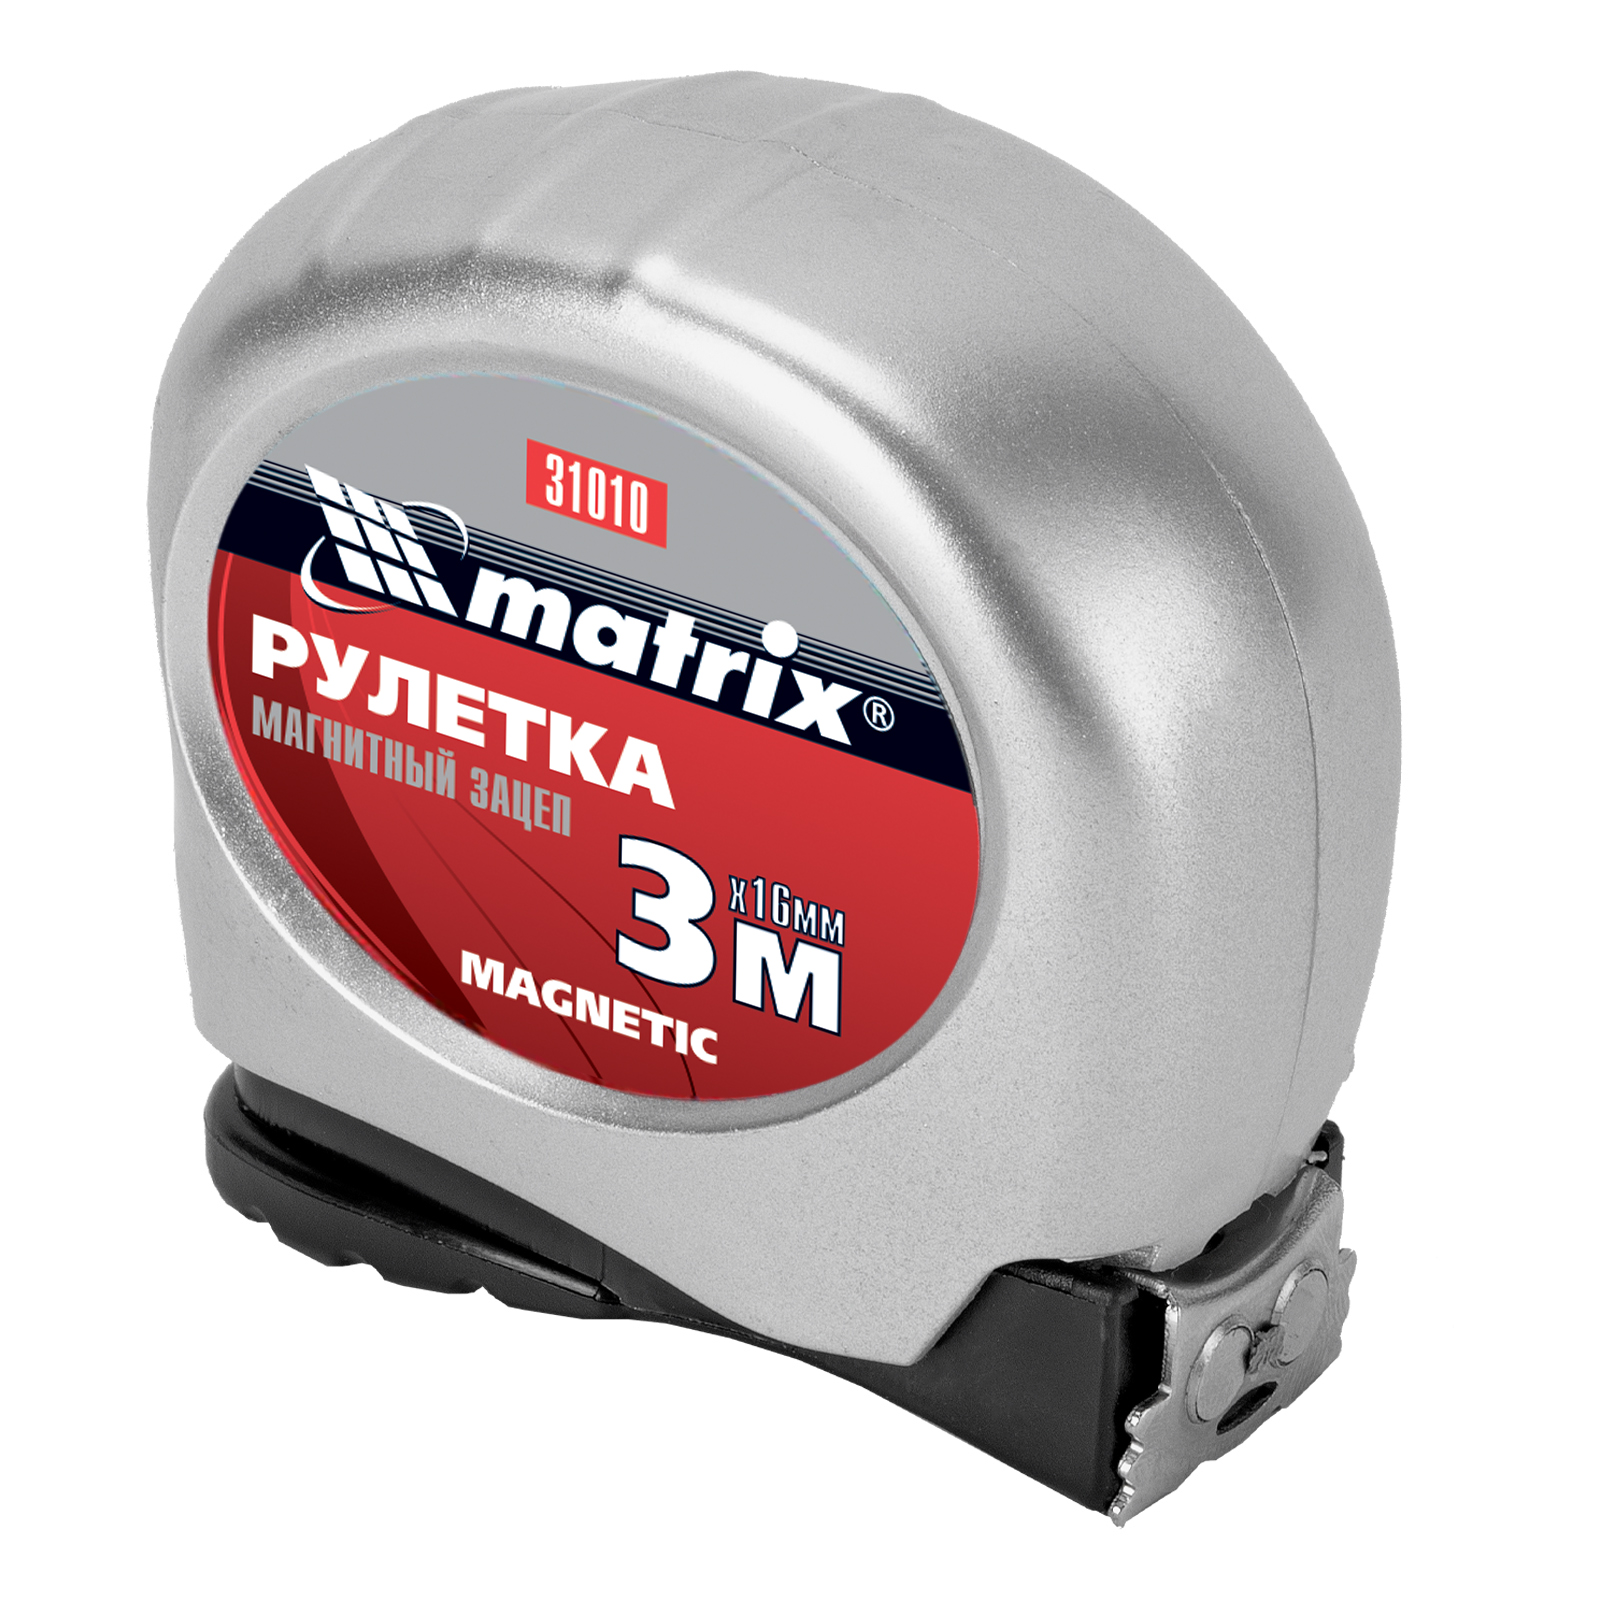 Рулетка MATRIX Magnetic 3мх16мм 31010 рулетка matrix magnetic с магнитным наконечником 7 5 м x 25 мм